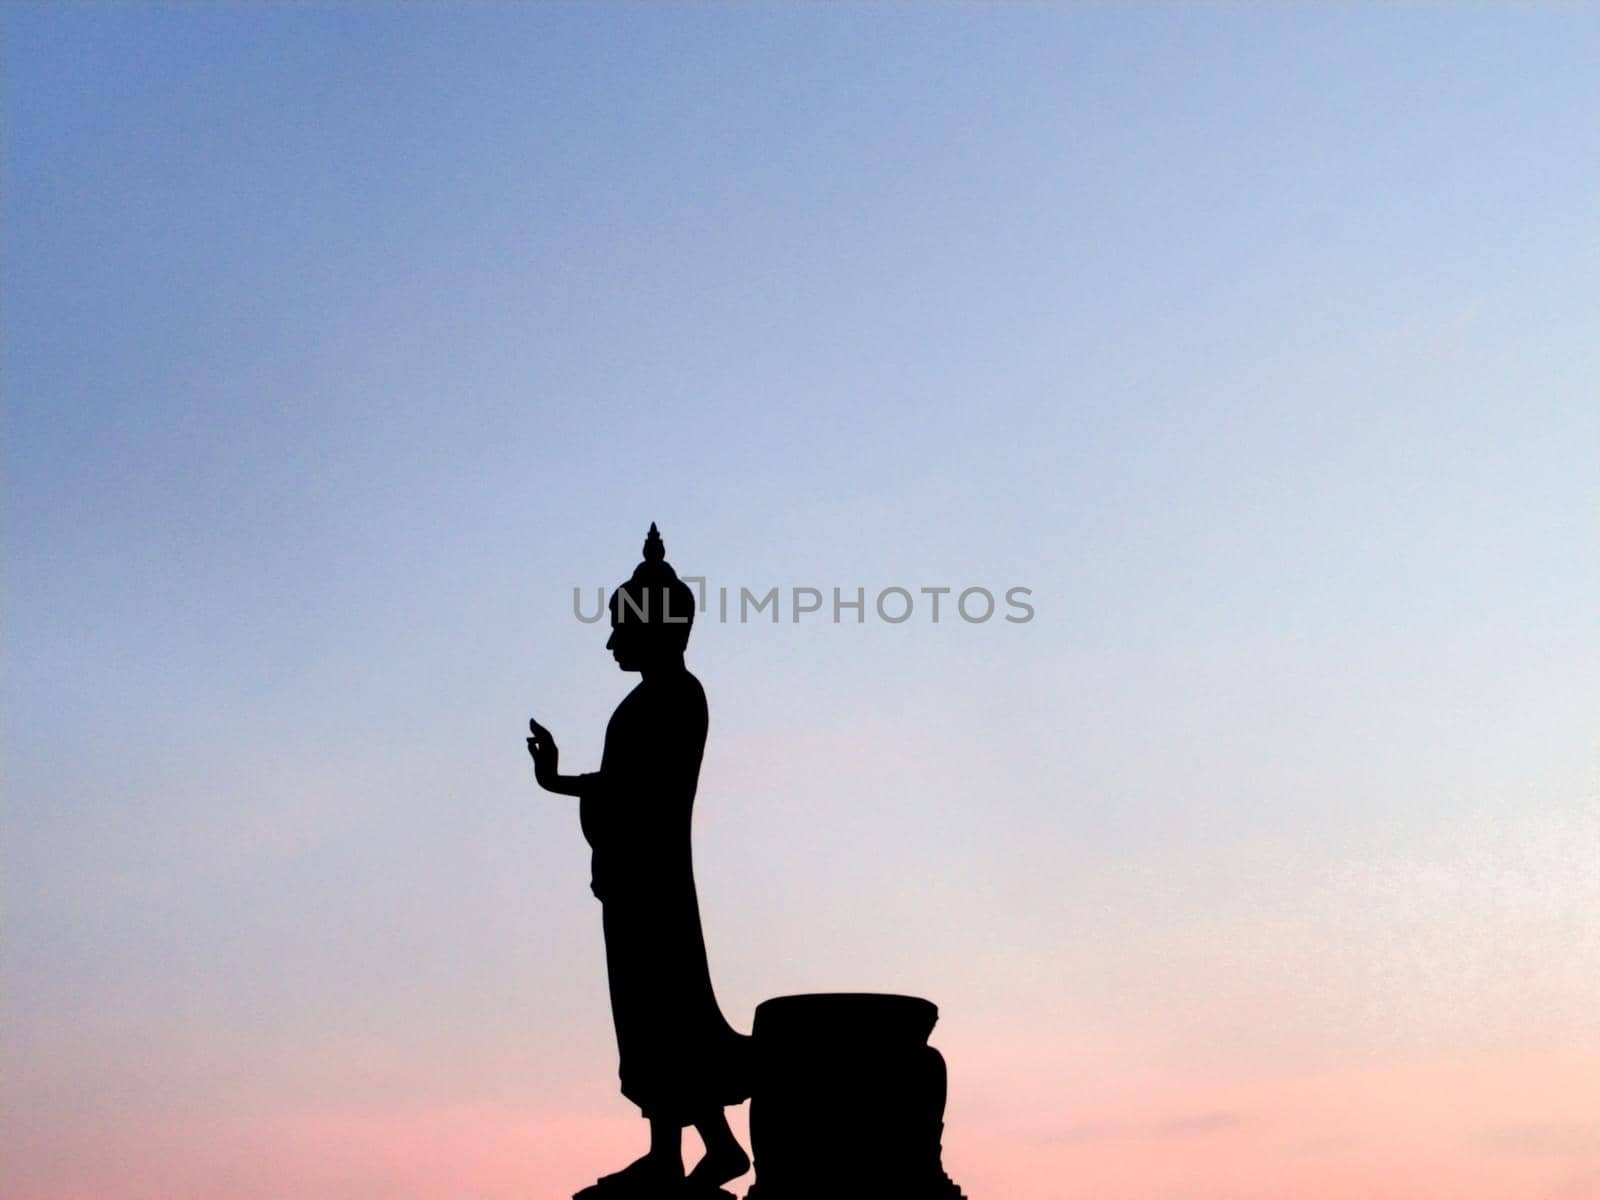 Big Buddha statue silhouette vanila sky blue pink orange shade at sunset beautiful background